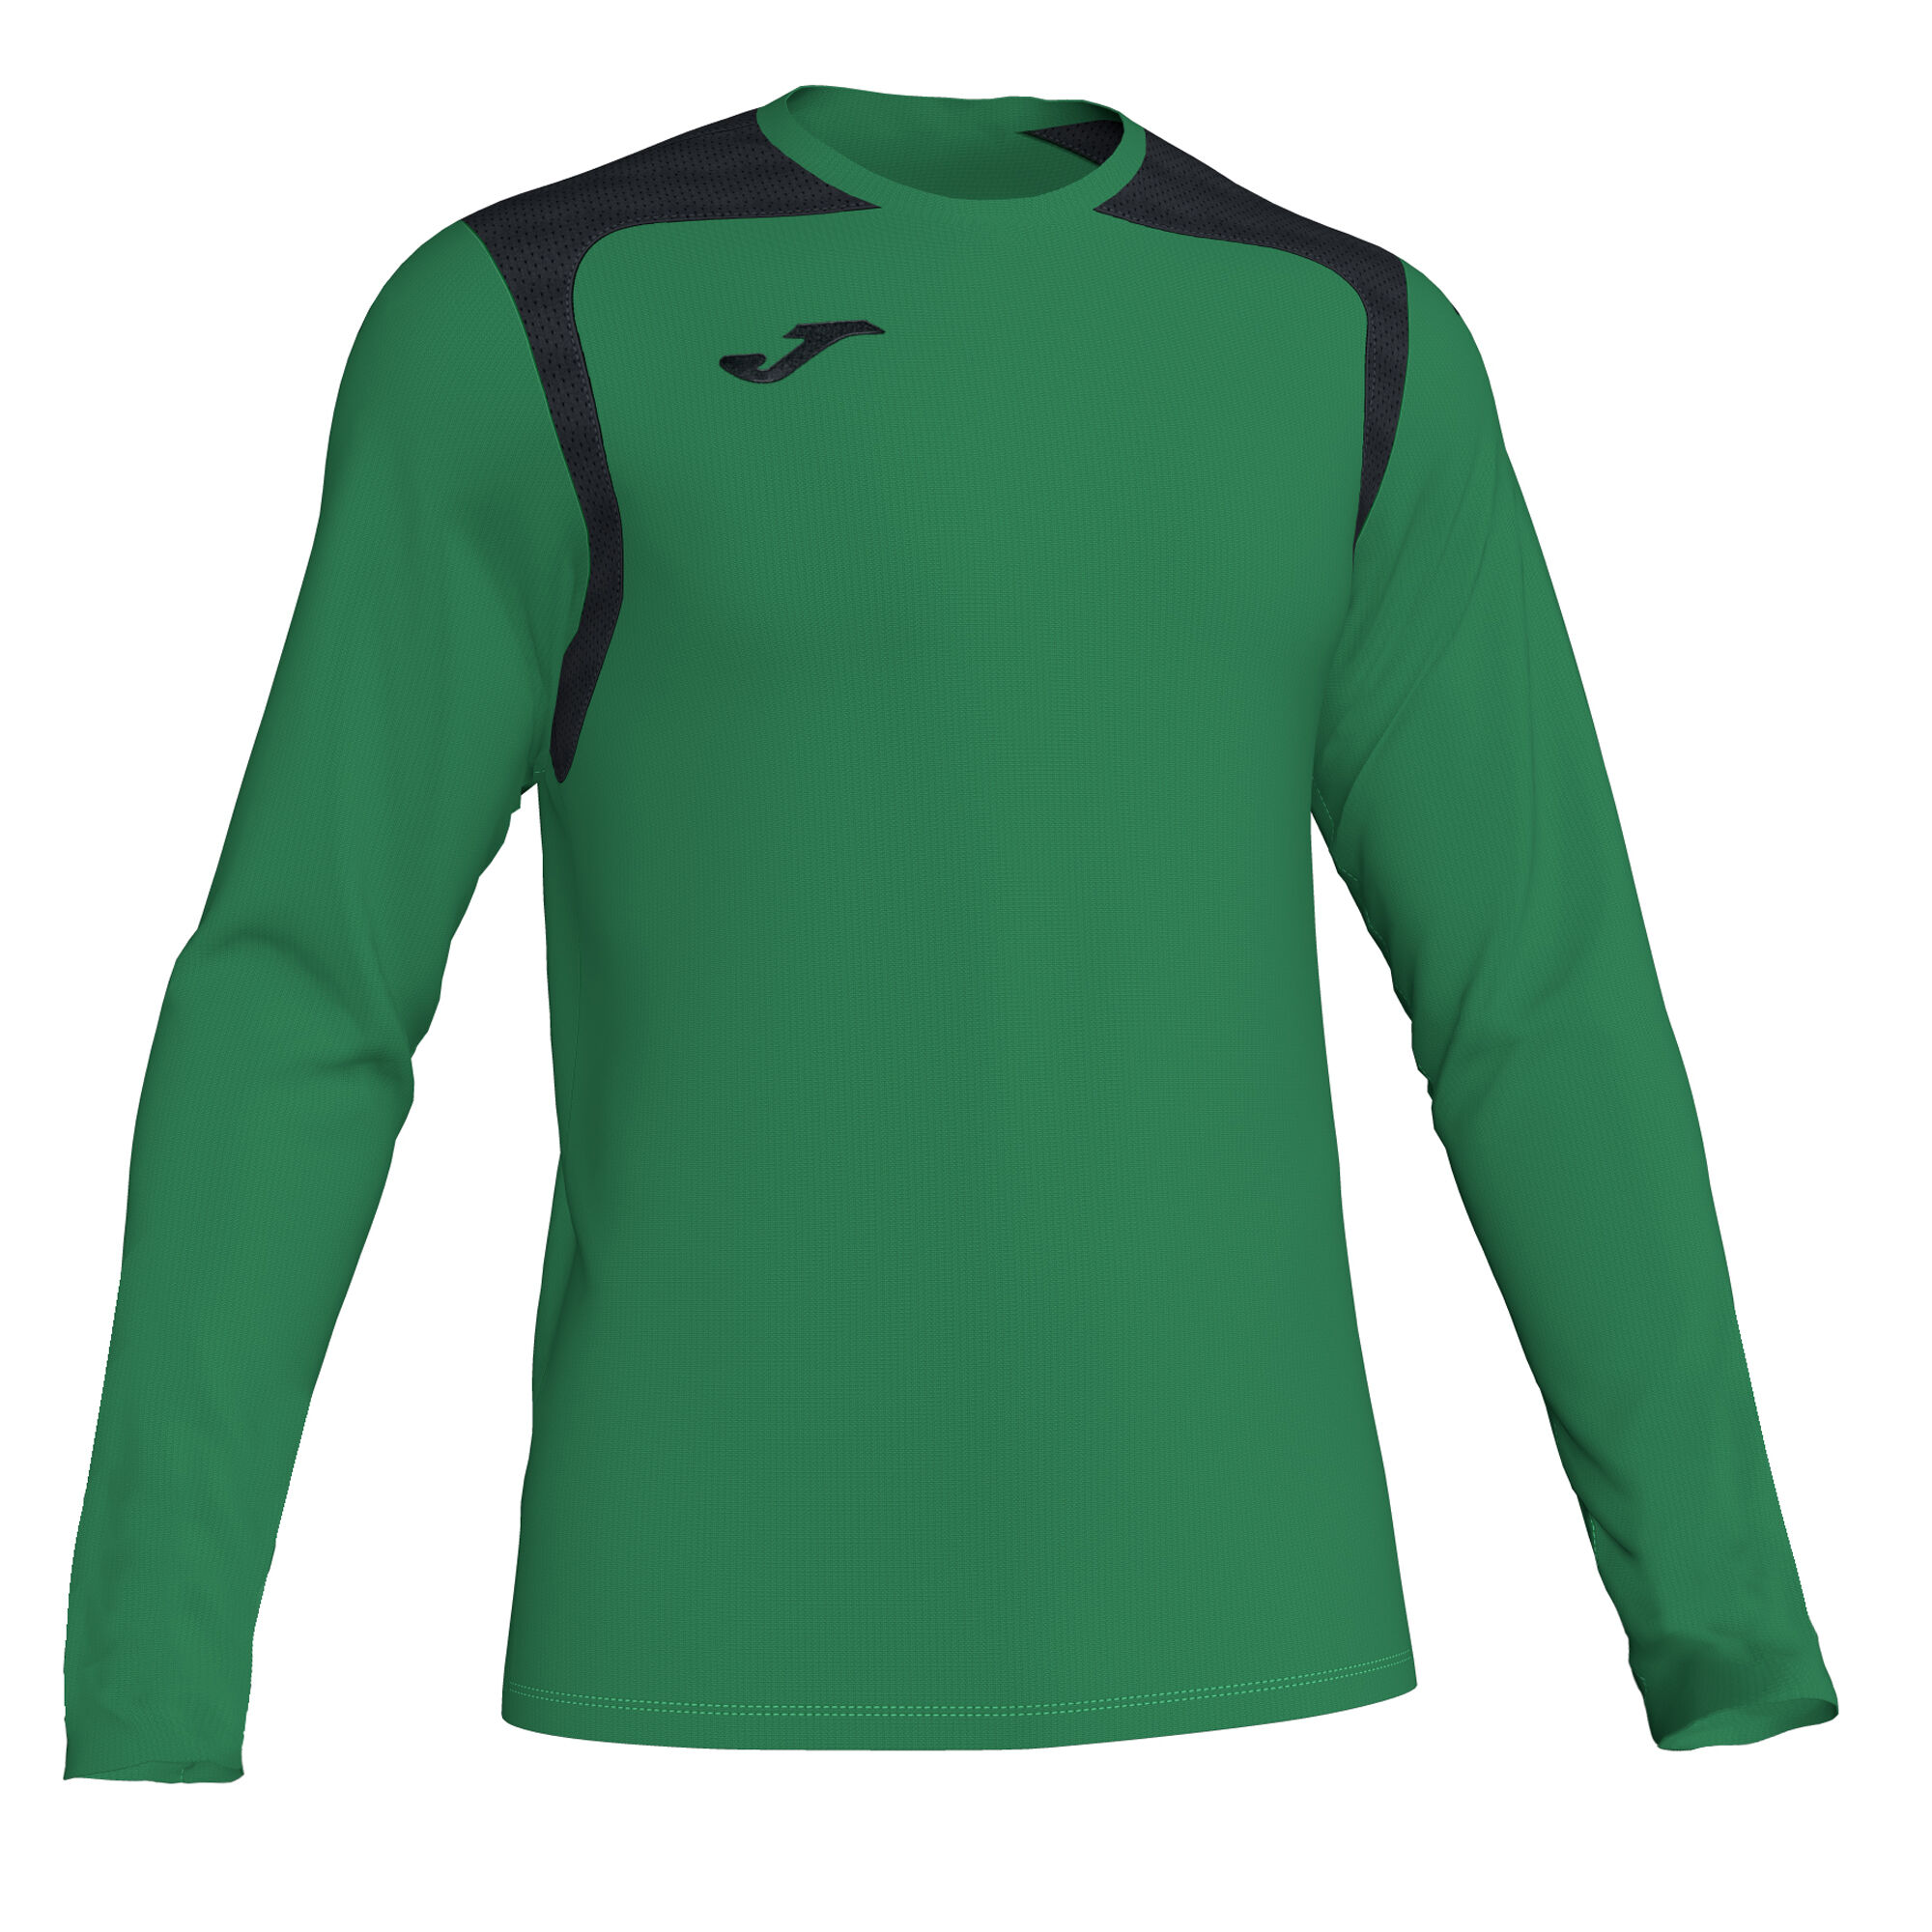 Camiseta manga larga Championship V verde negro | JOMA®